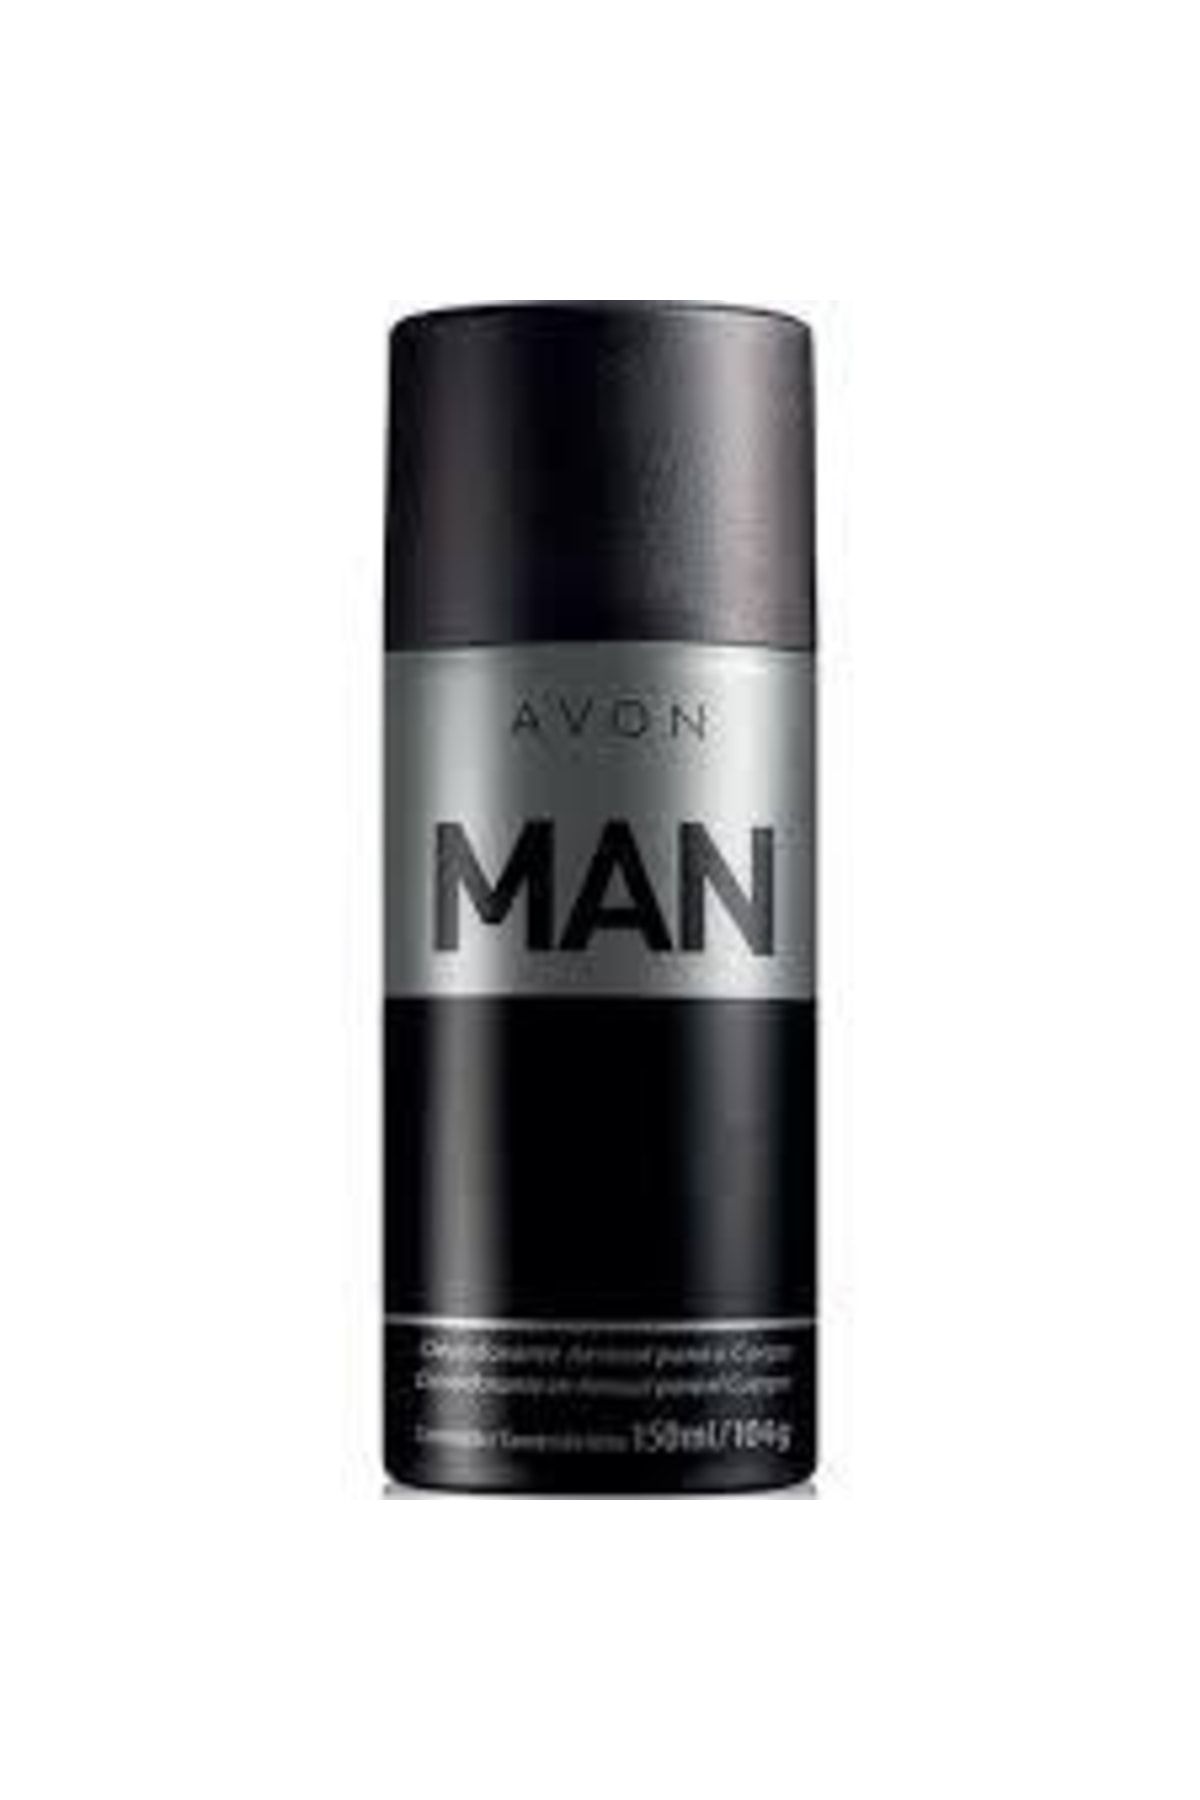 Avon Man Deodorant